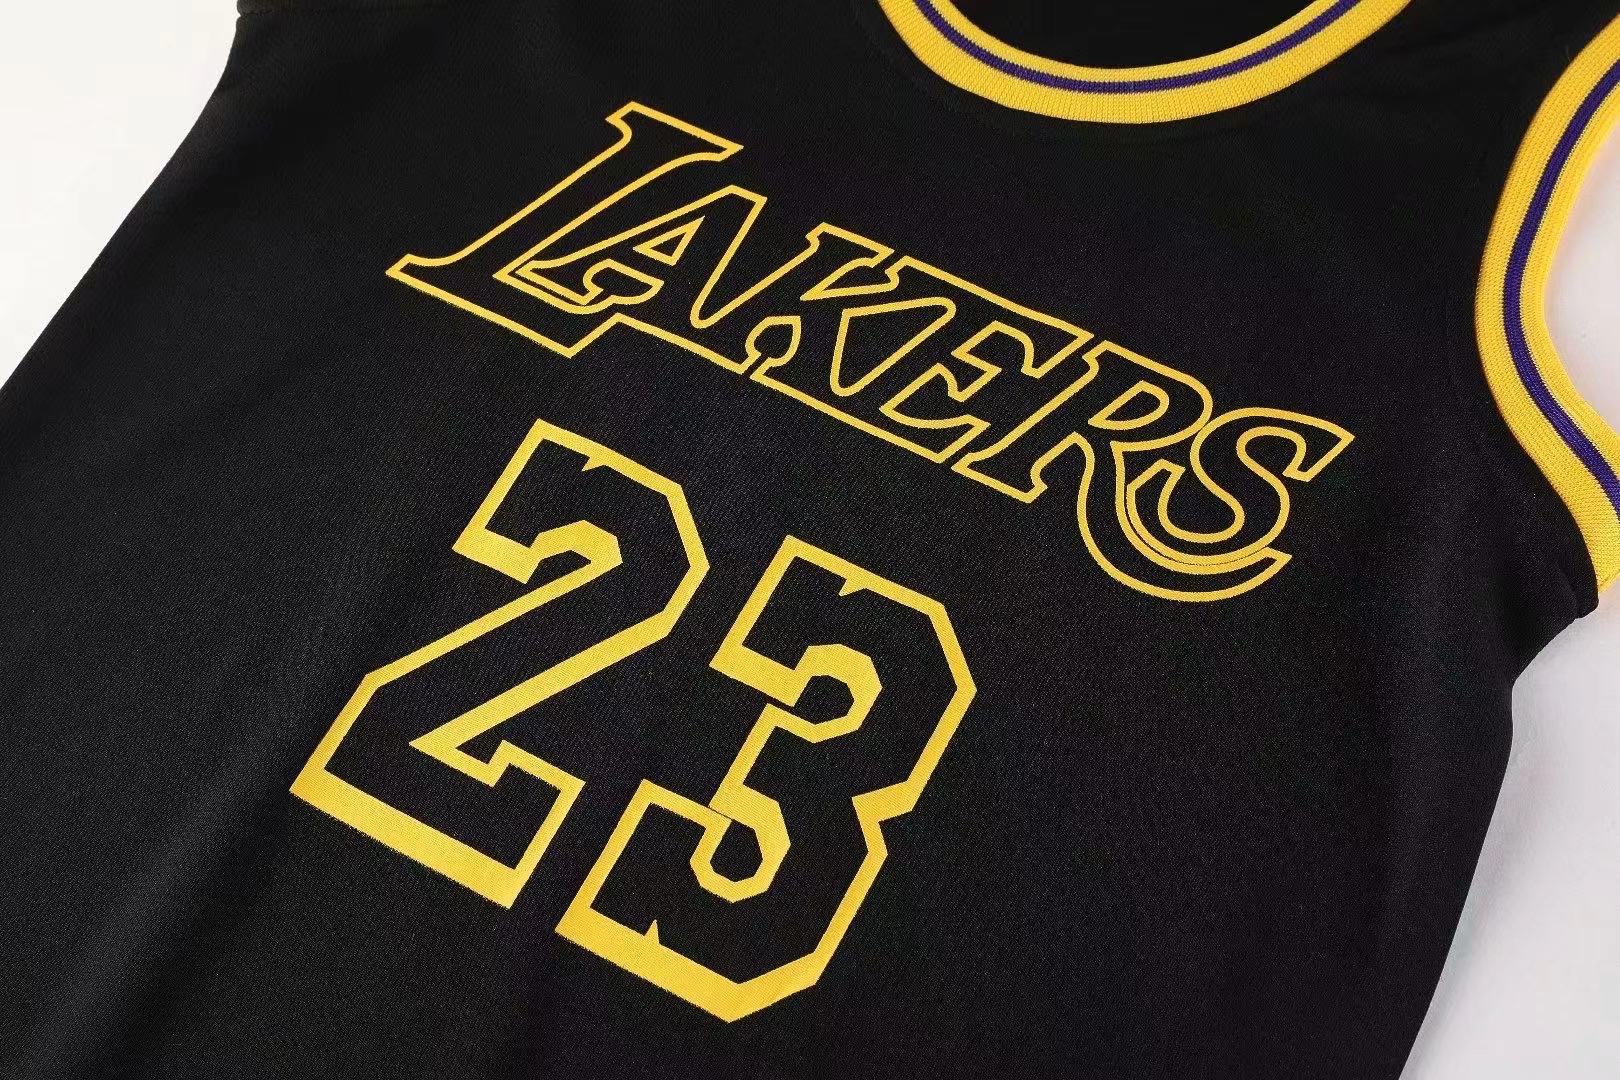 Children's Jersey - NBA Los Angeles Lakers #23 Lebron James Basketball  Jersey, Sportswear Universal Sleeveless T-Shirt Shorts Jersey Set  (3XS~2XL),L135~145CM: Buy Online at Best Price in UAE 